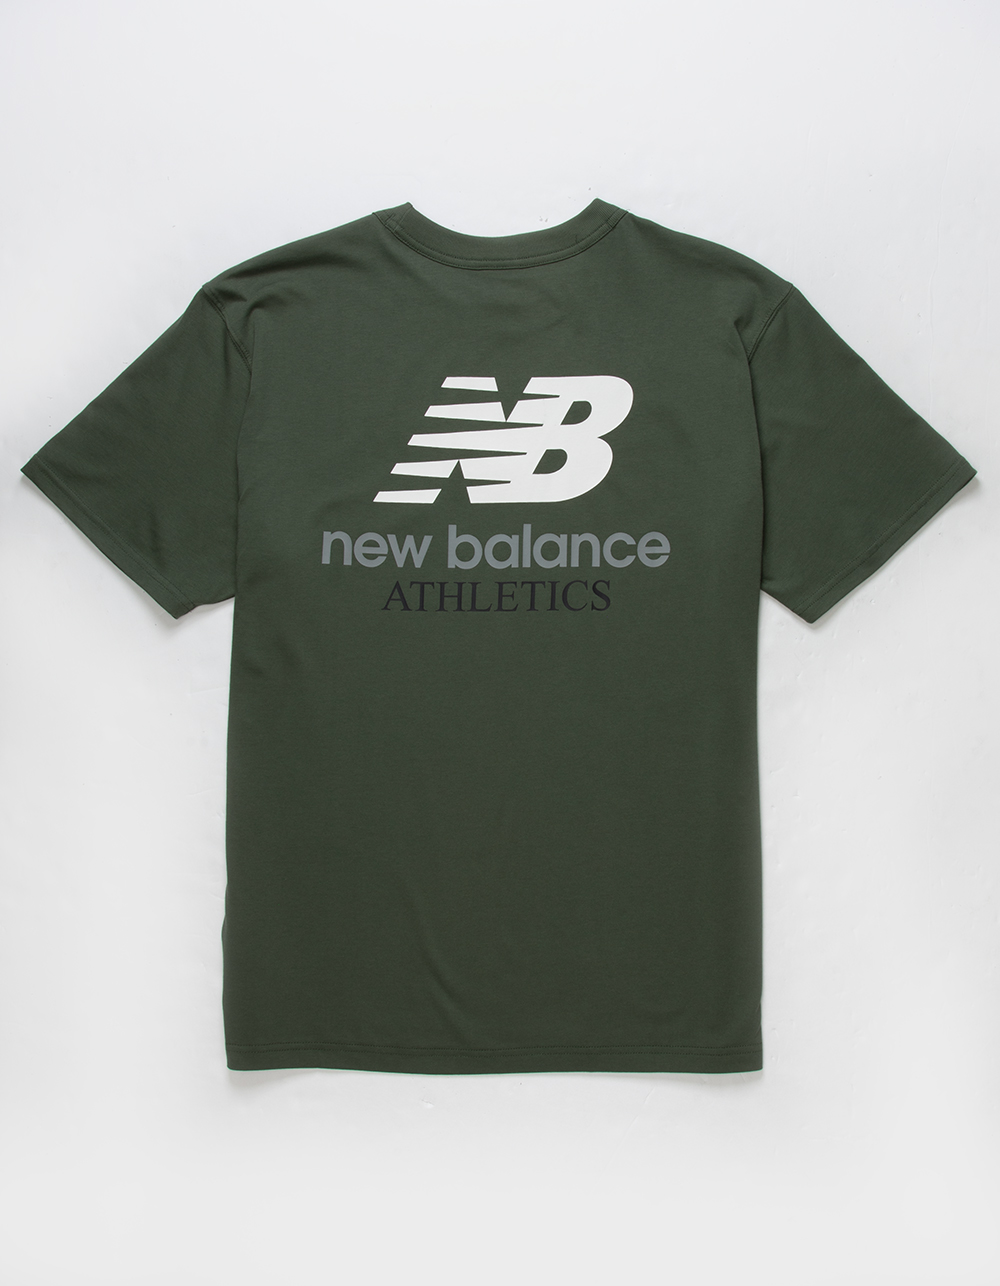 NEW BALANCE Athletics Logo OLIVE - Tee | Tillys Mens